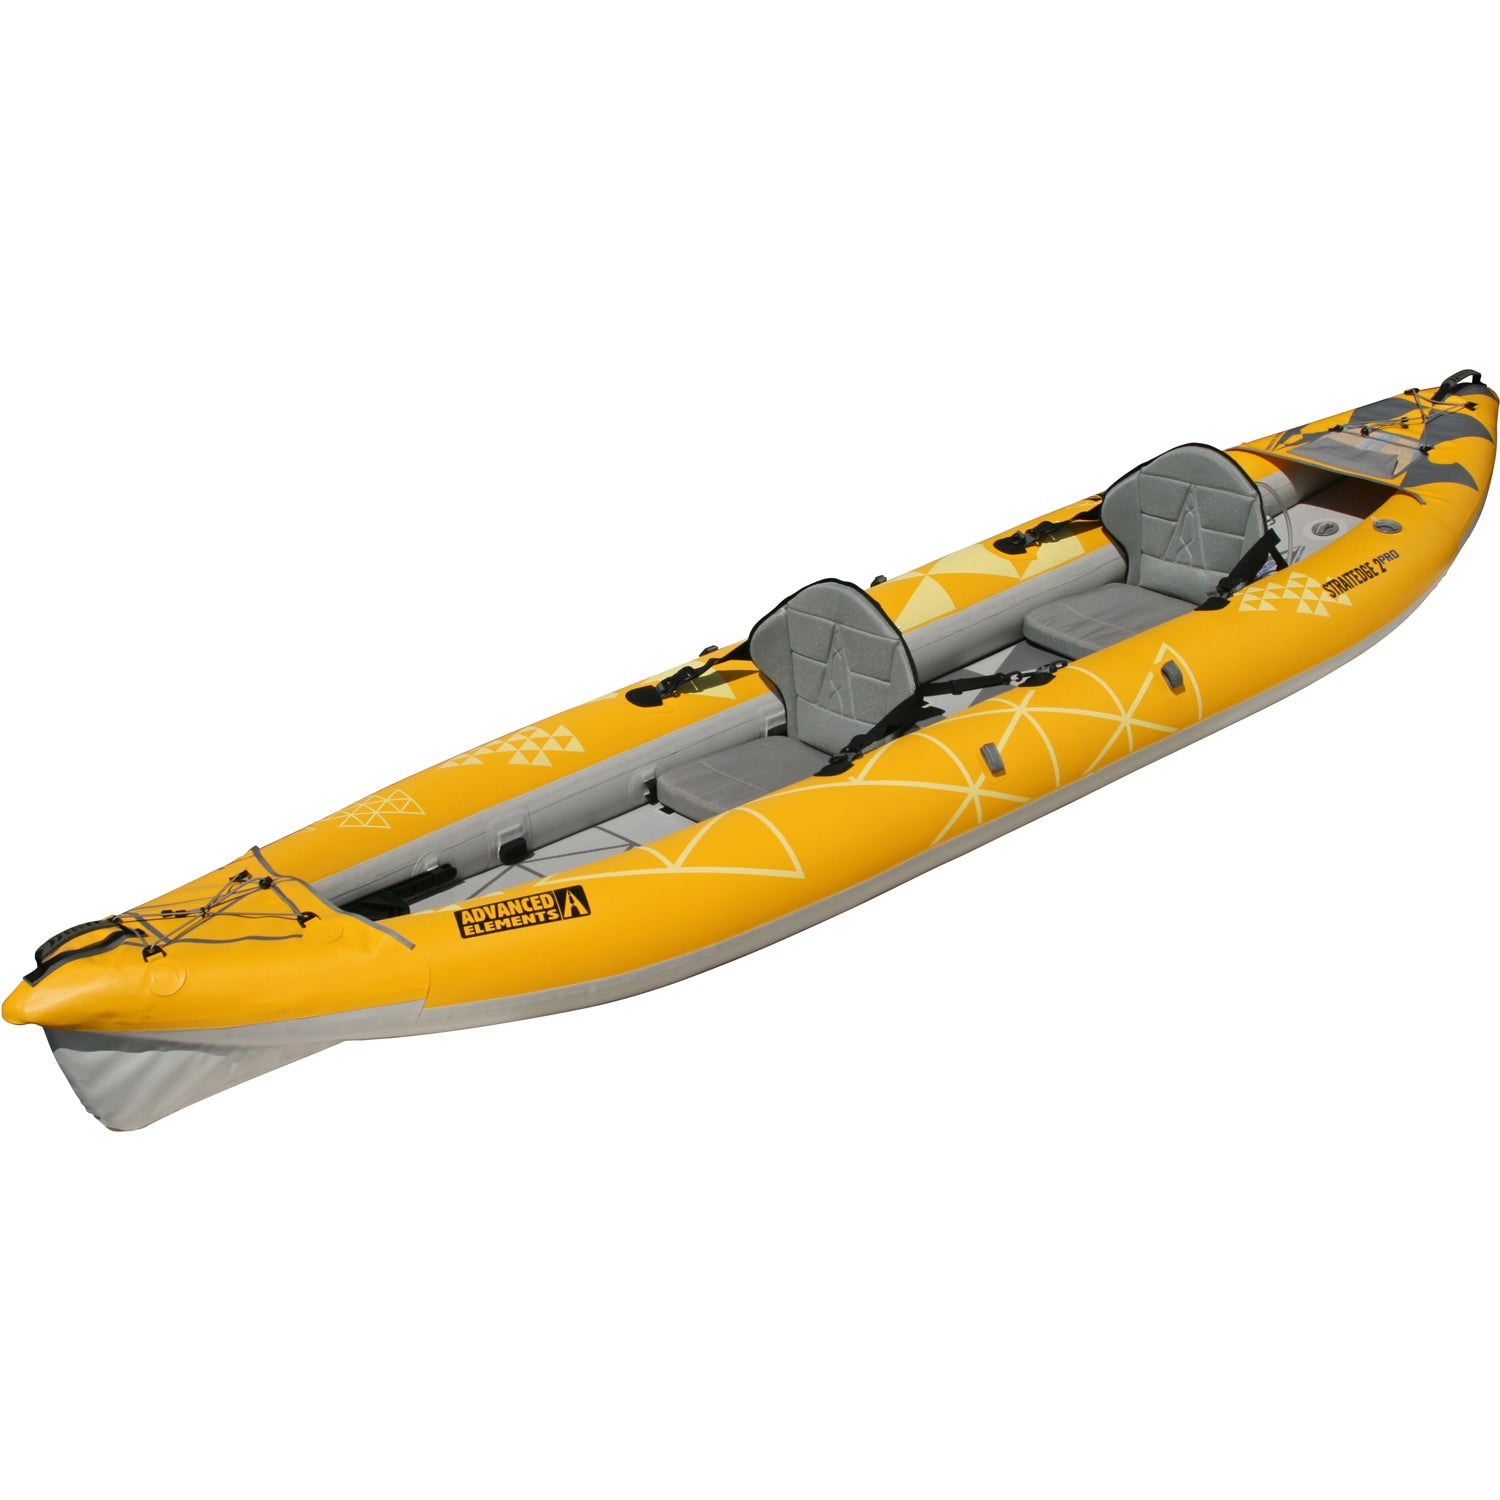 Advanced Elements StraitEdge 2 Pro Inflatable Kayak in Yellow/Gray angle